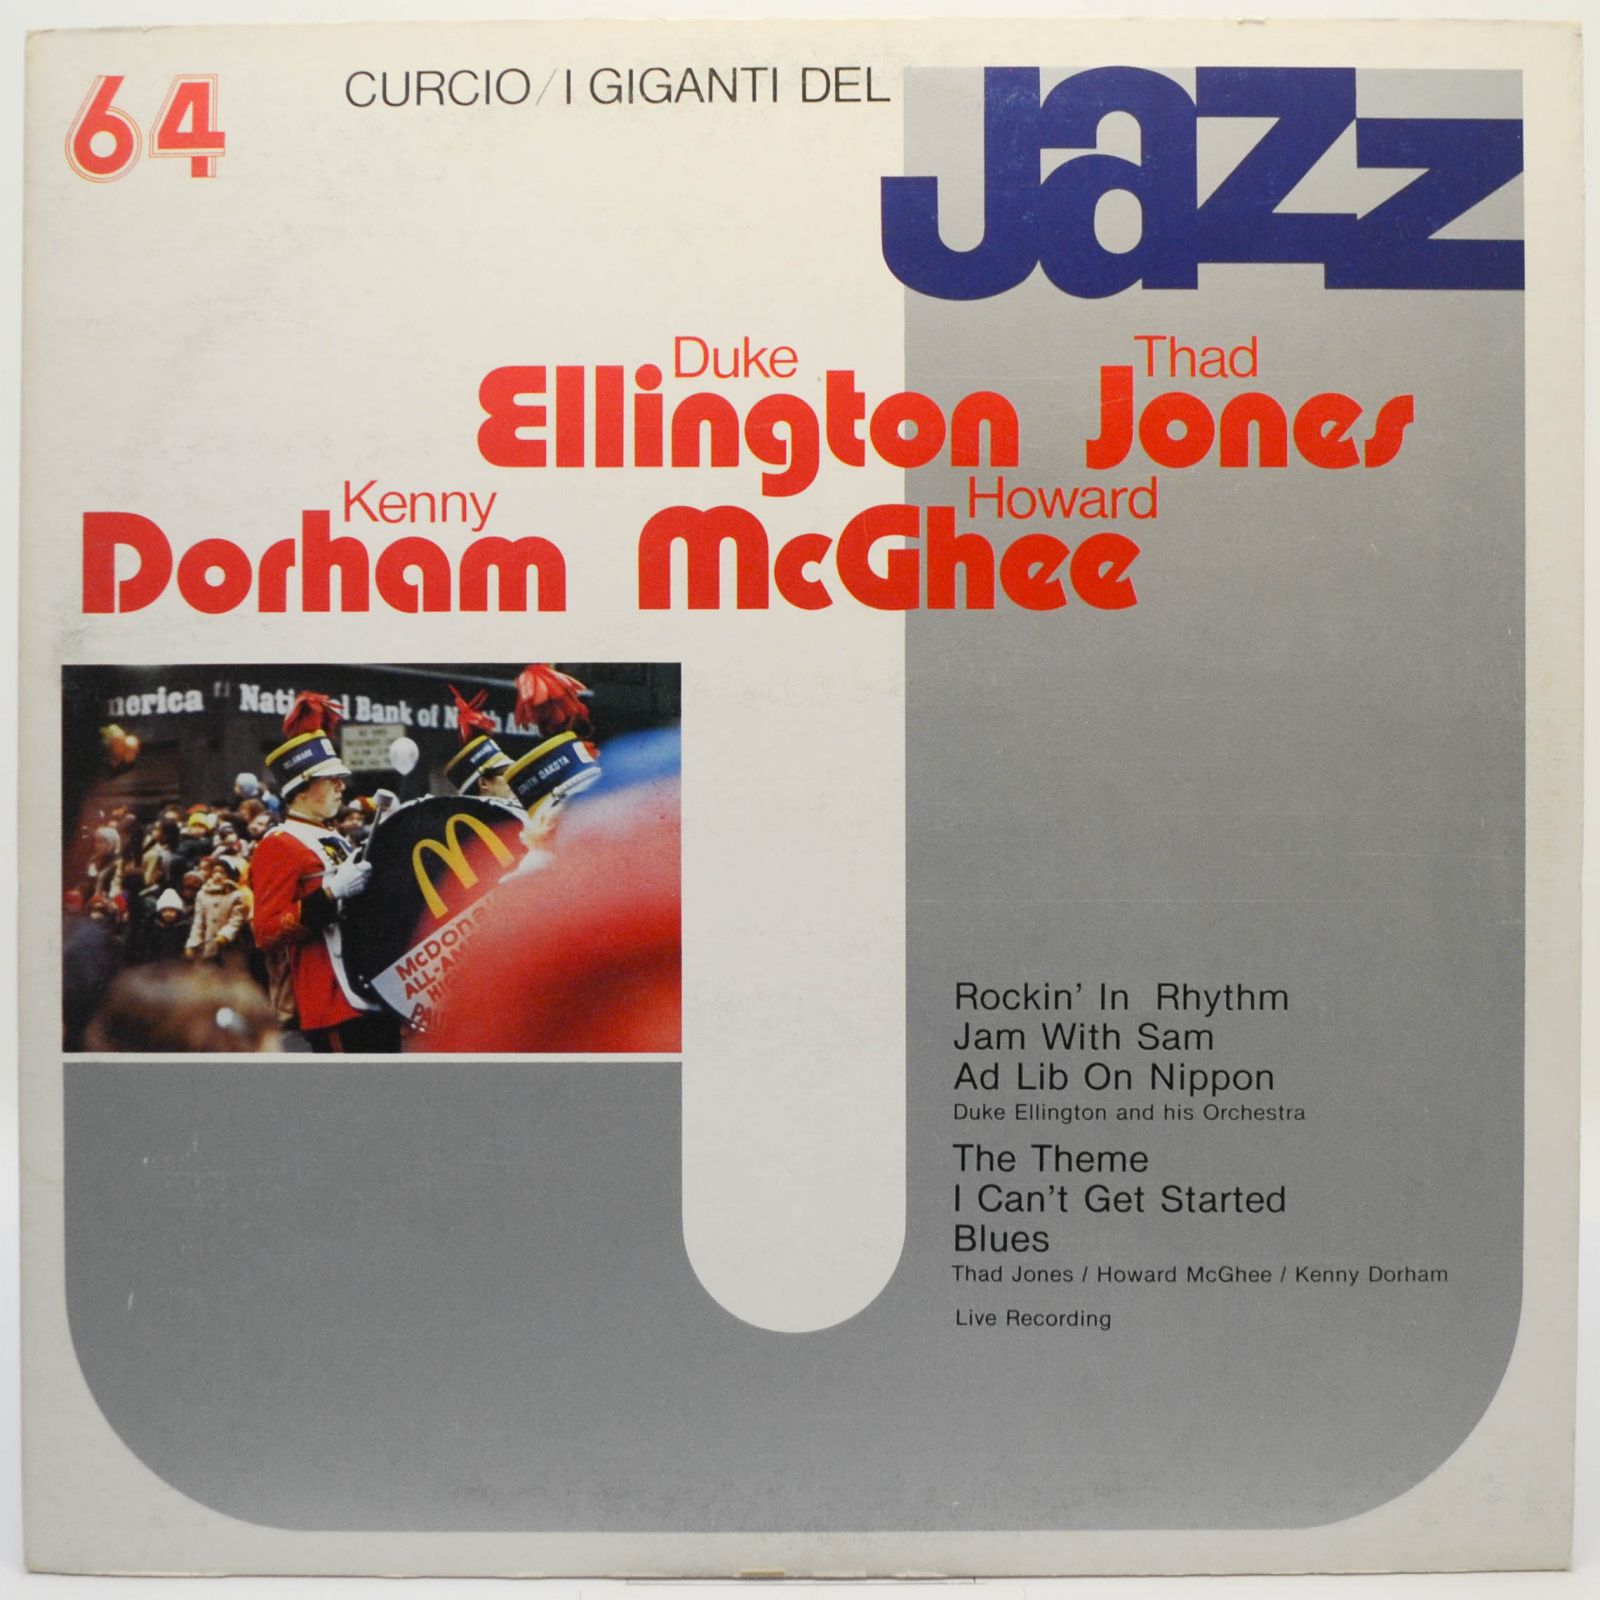 Europa Jazz, 1981